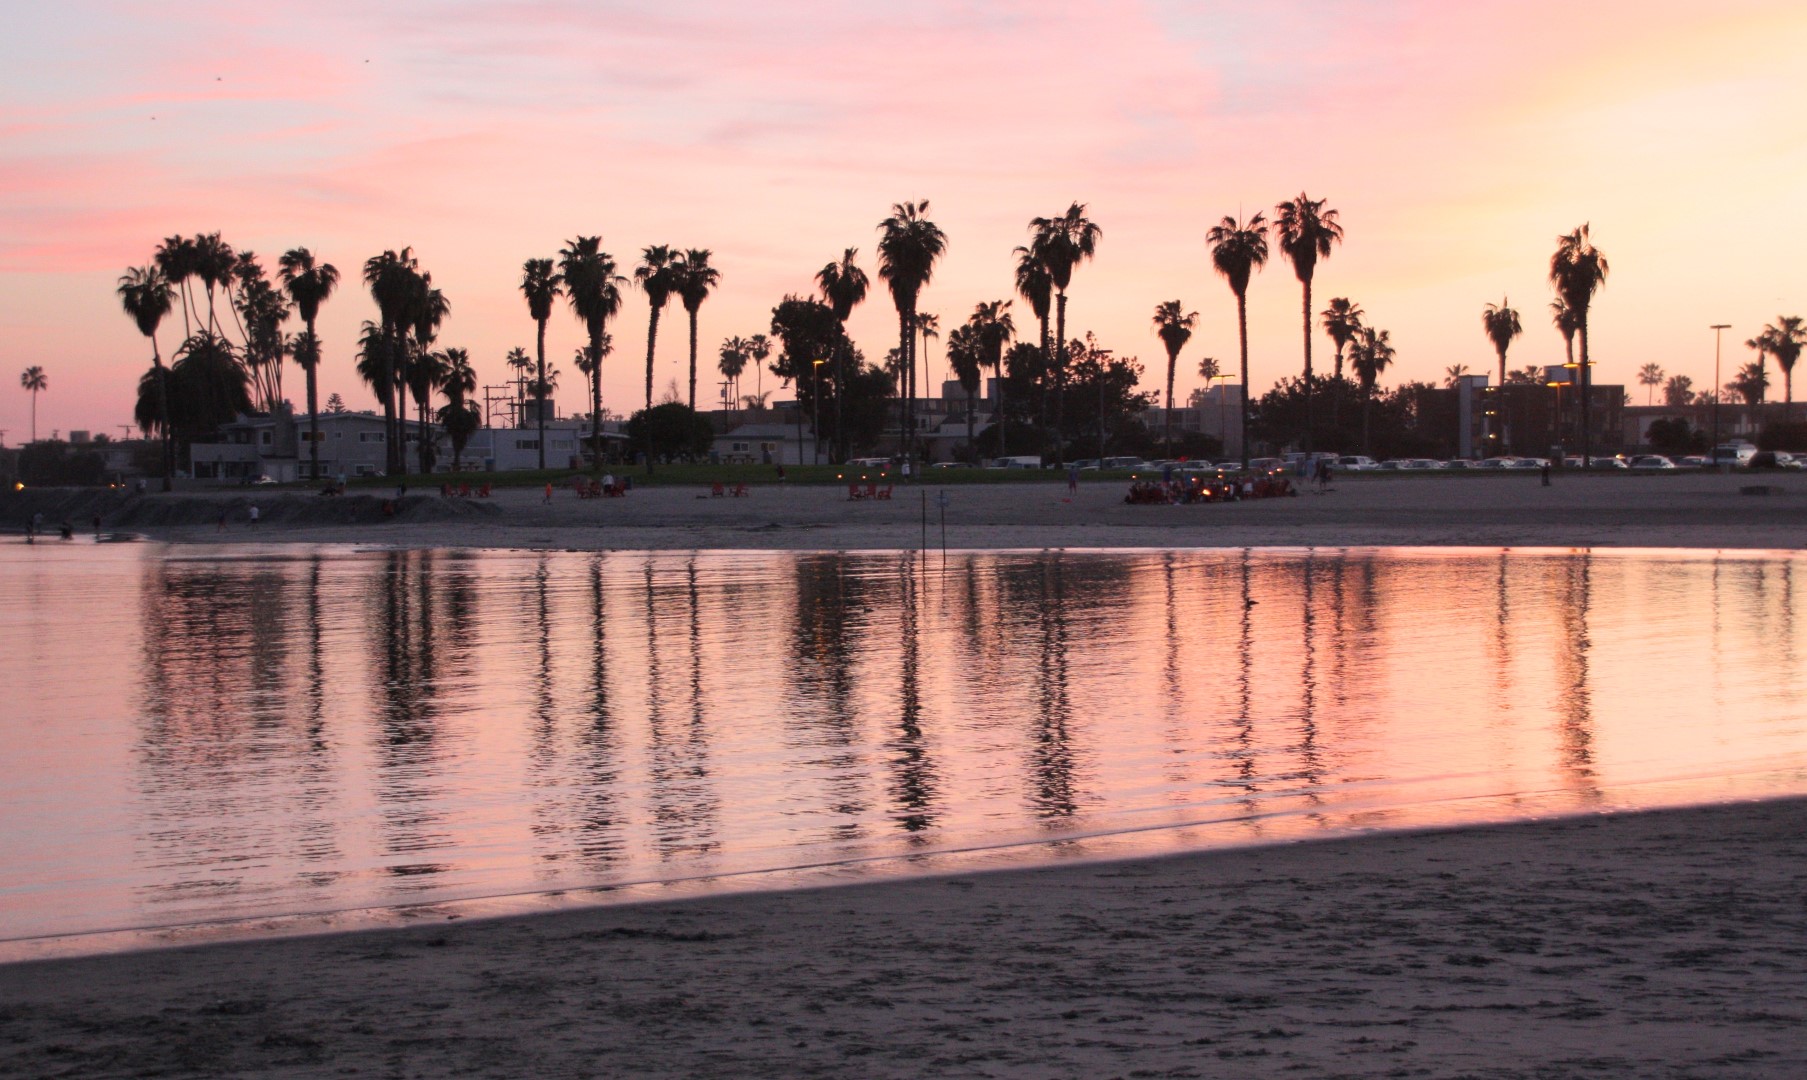 Mission Bay Park Beaches, San Diego, CA